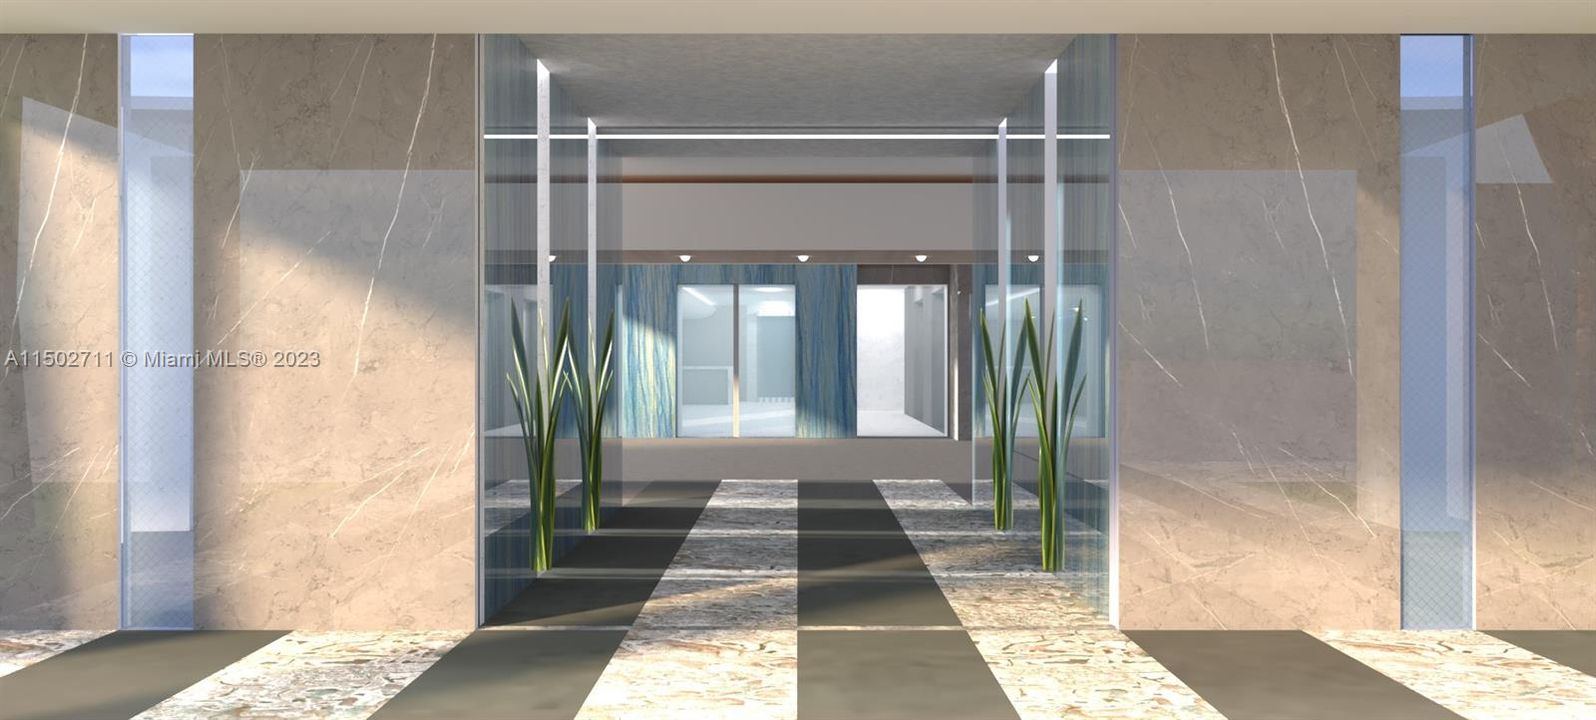 building entrance rendering